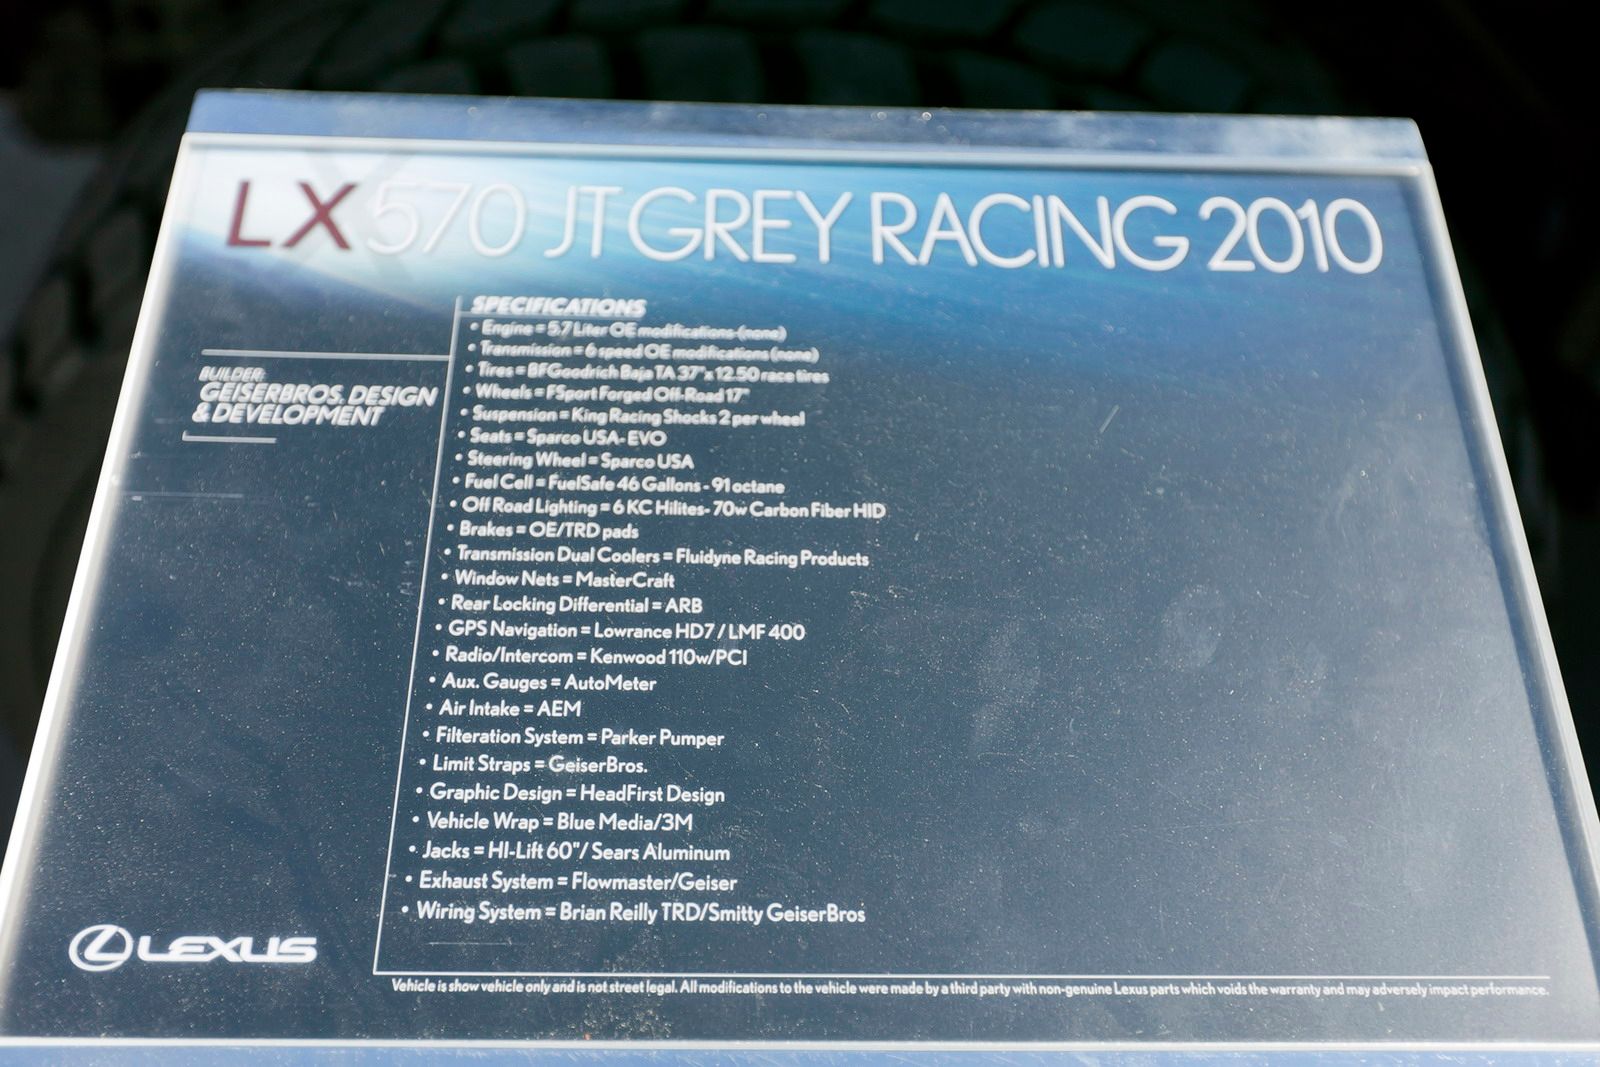 2012 Lexus LX 570 by JT Grey Racing